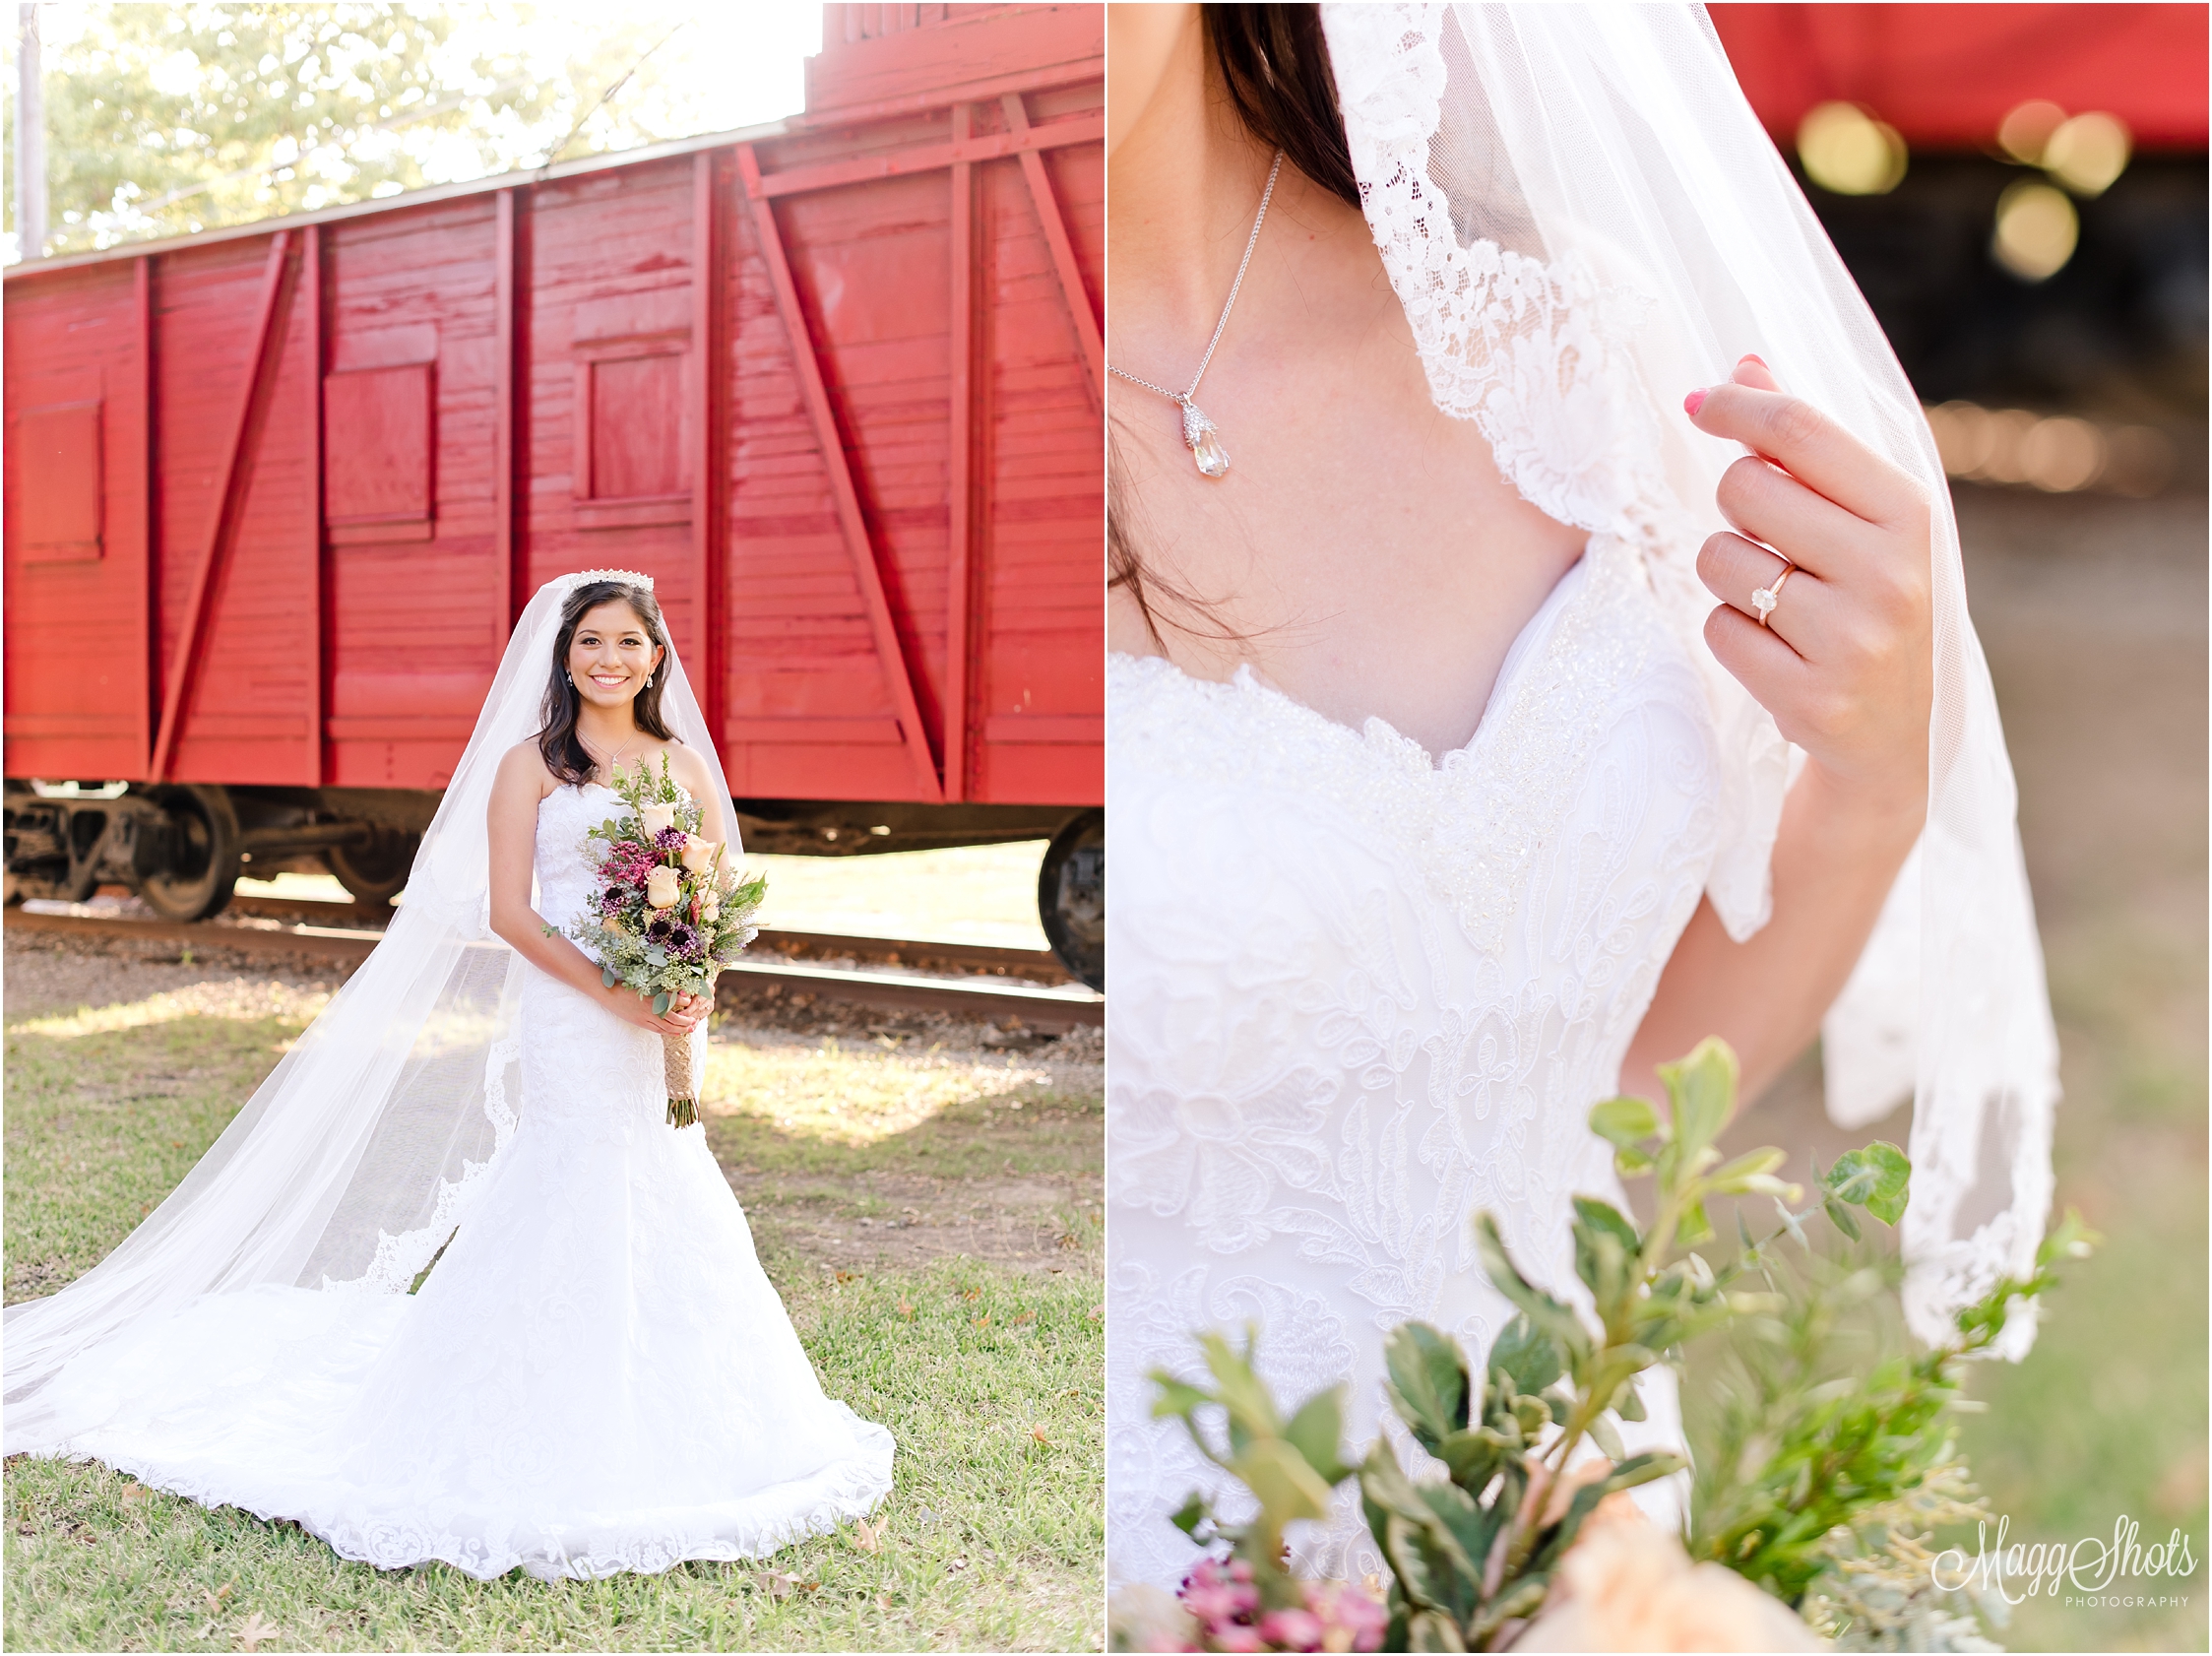 Bridals, Love, Flowers, Bouquet, Bride, Heritage Park, Gazebo, Wedding Dress, Beautiful, Veil, Wedding, Ring, Caboose, Train Car